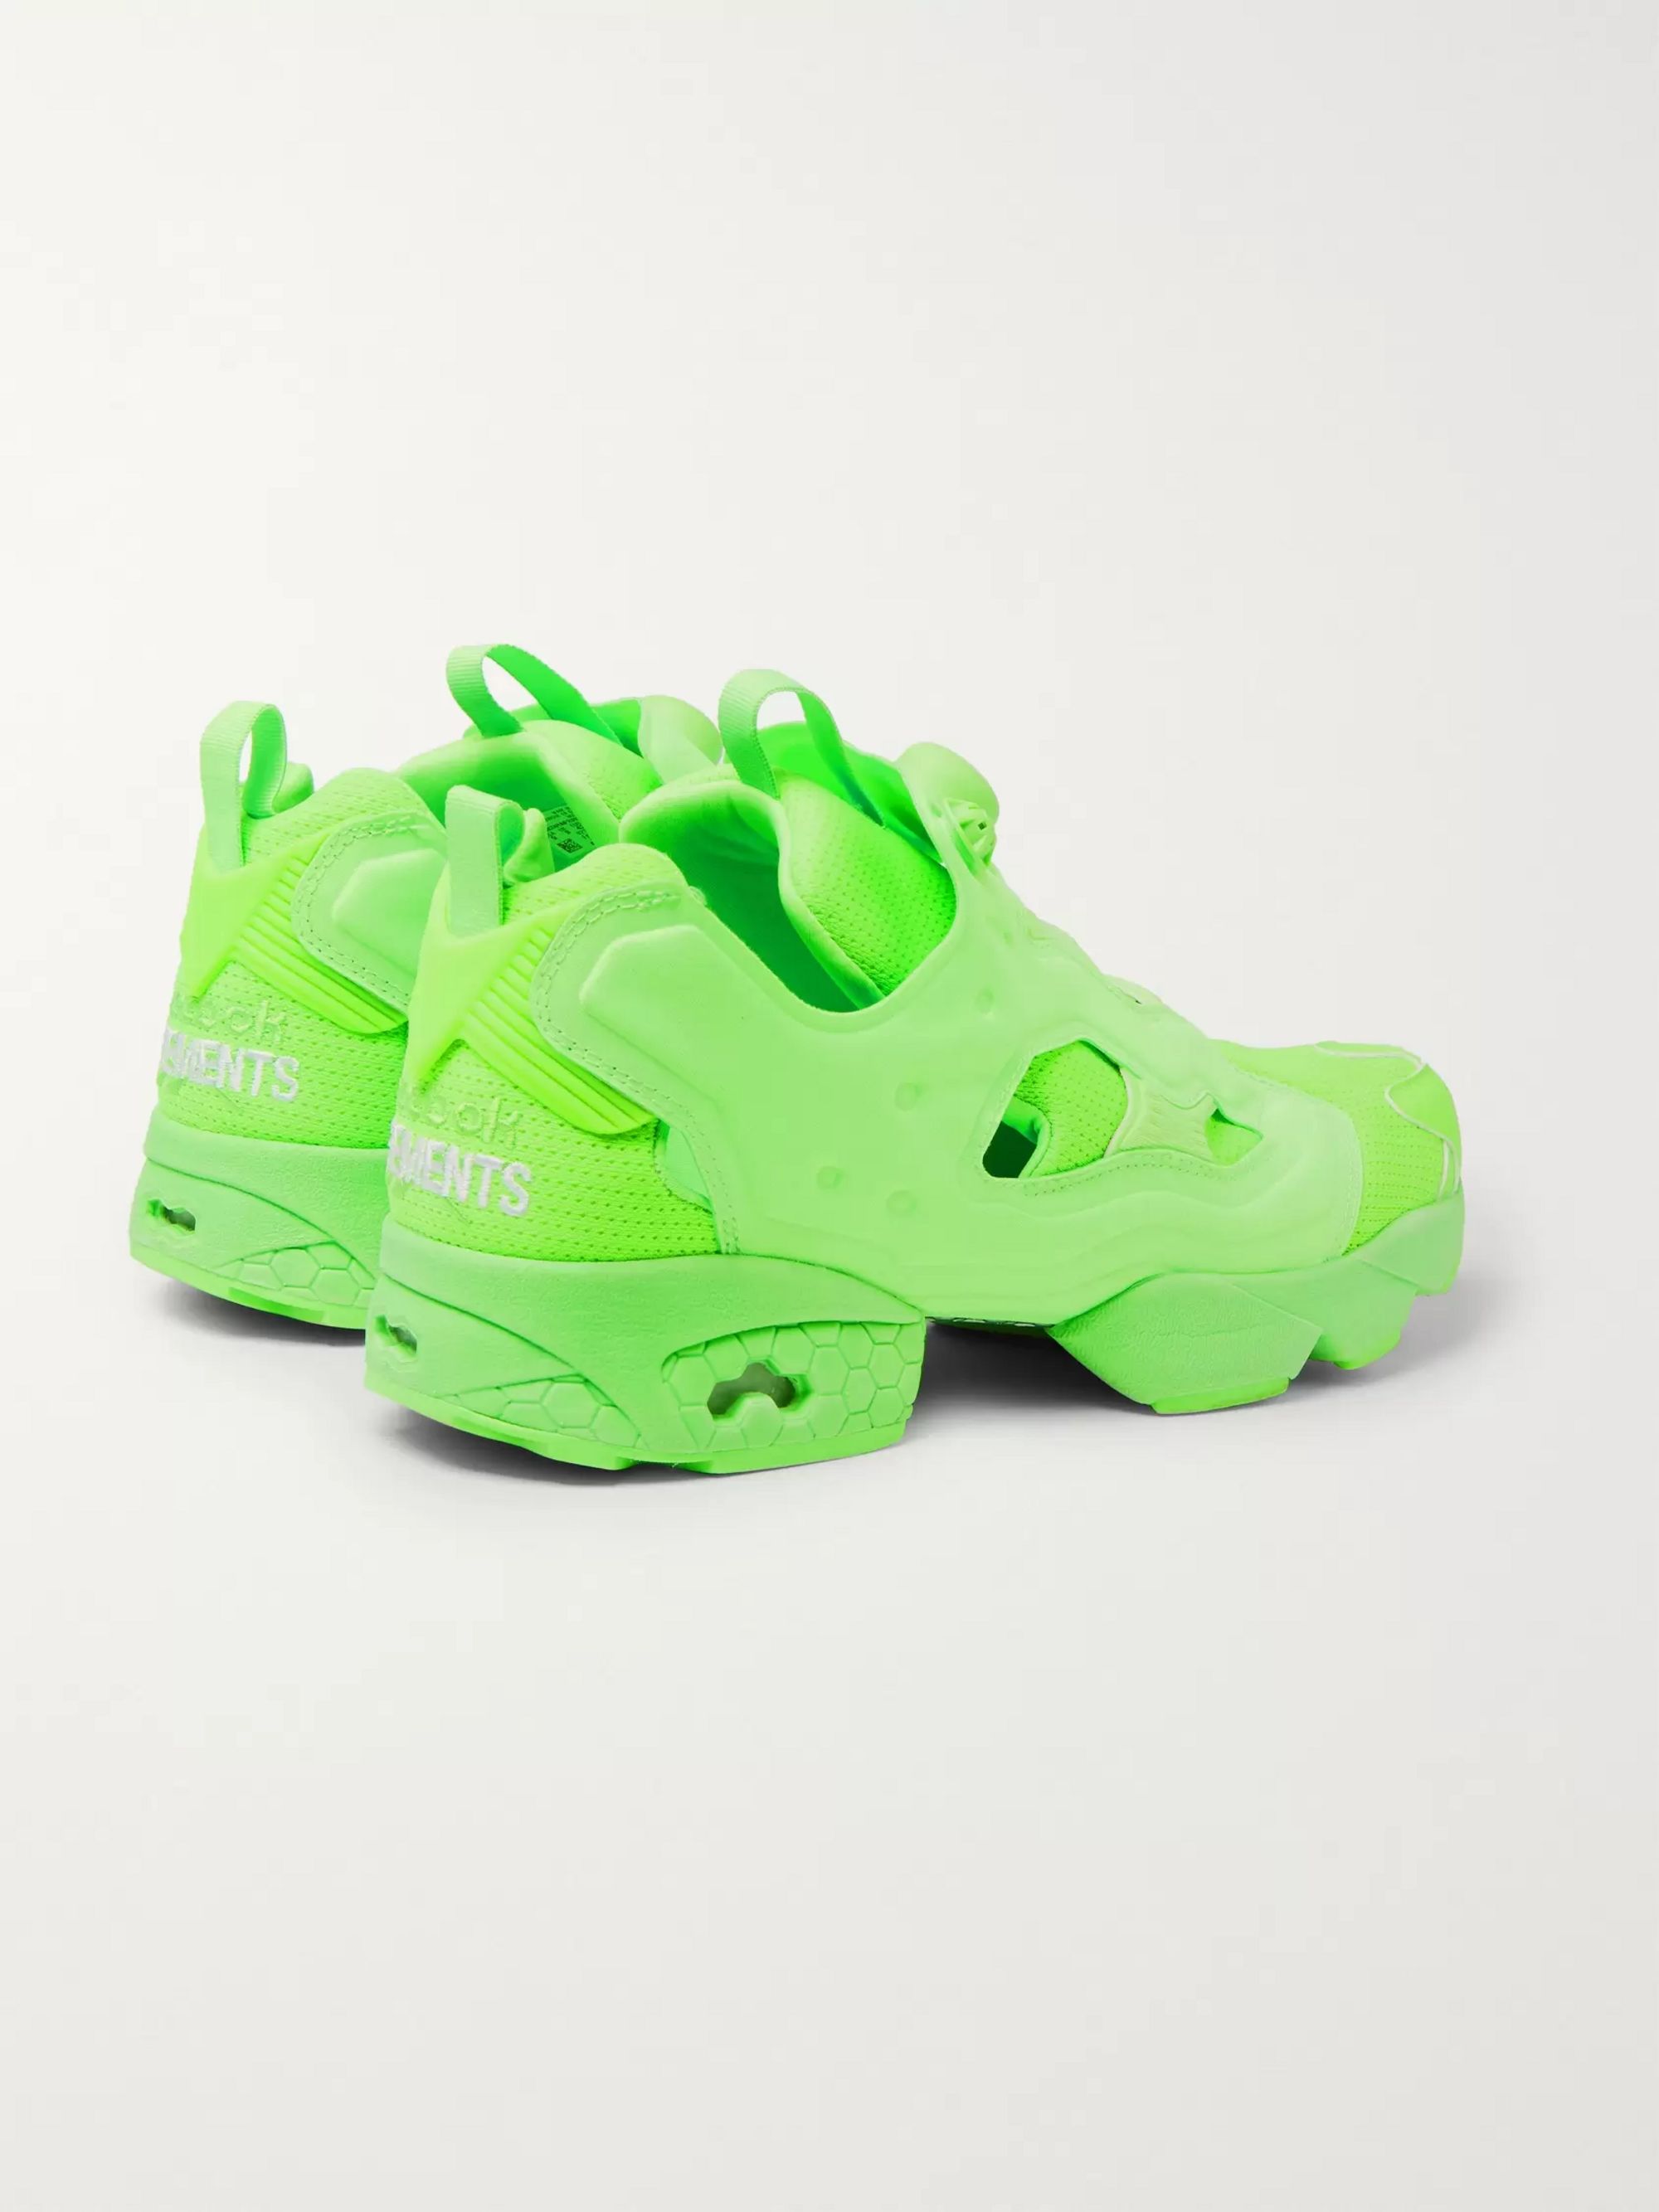 lime green reebok shoes